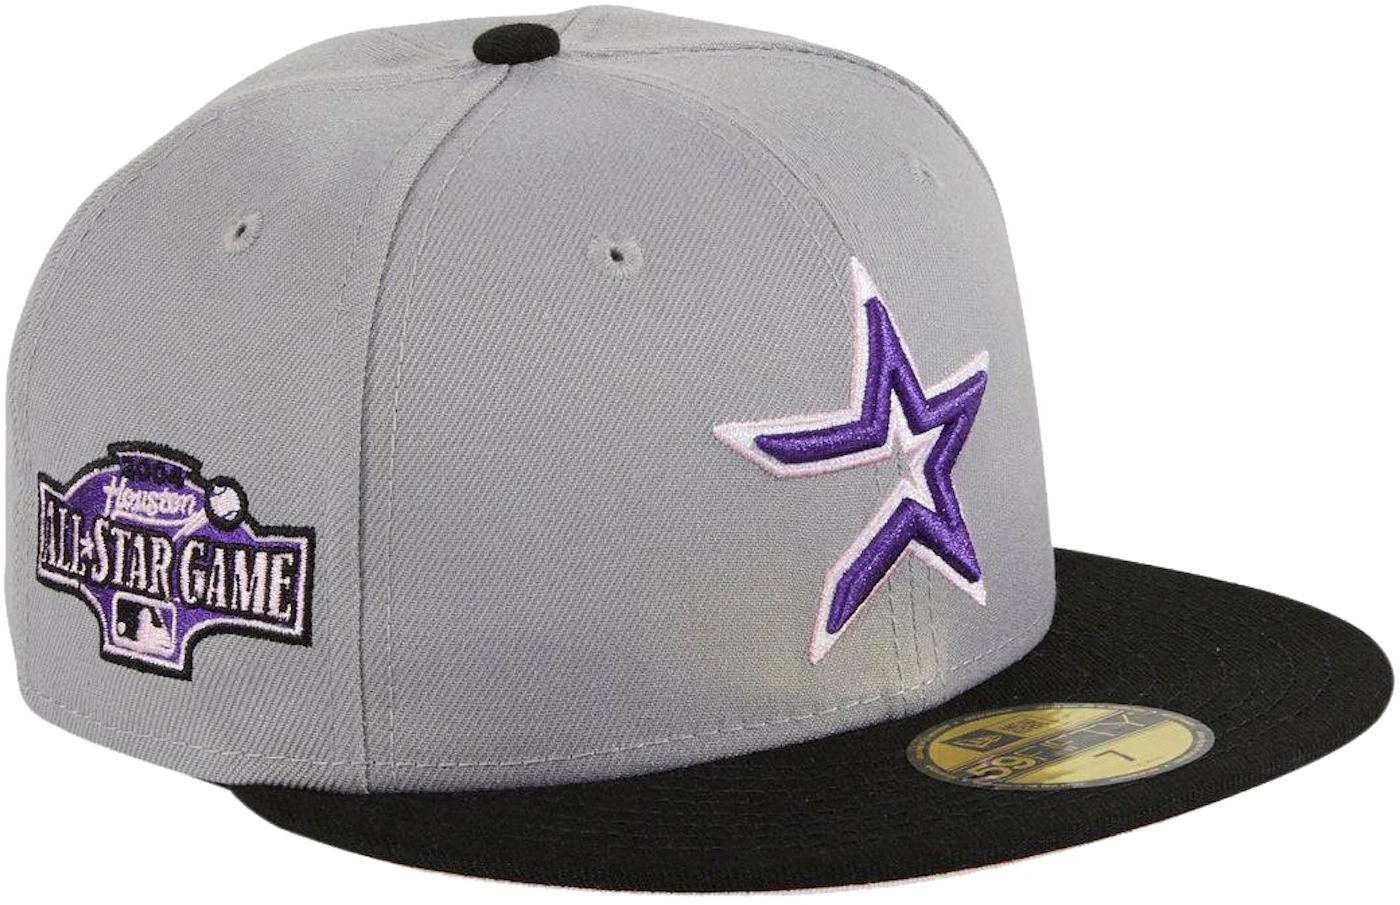 New Era Houston Astros Fuji 2004 All Star Game Patch Hat Club